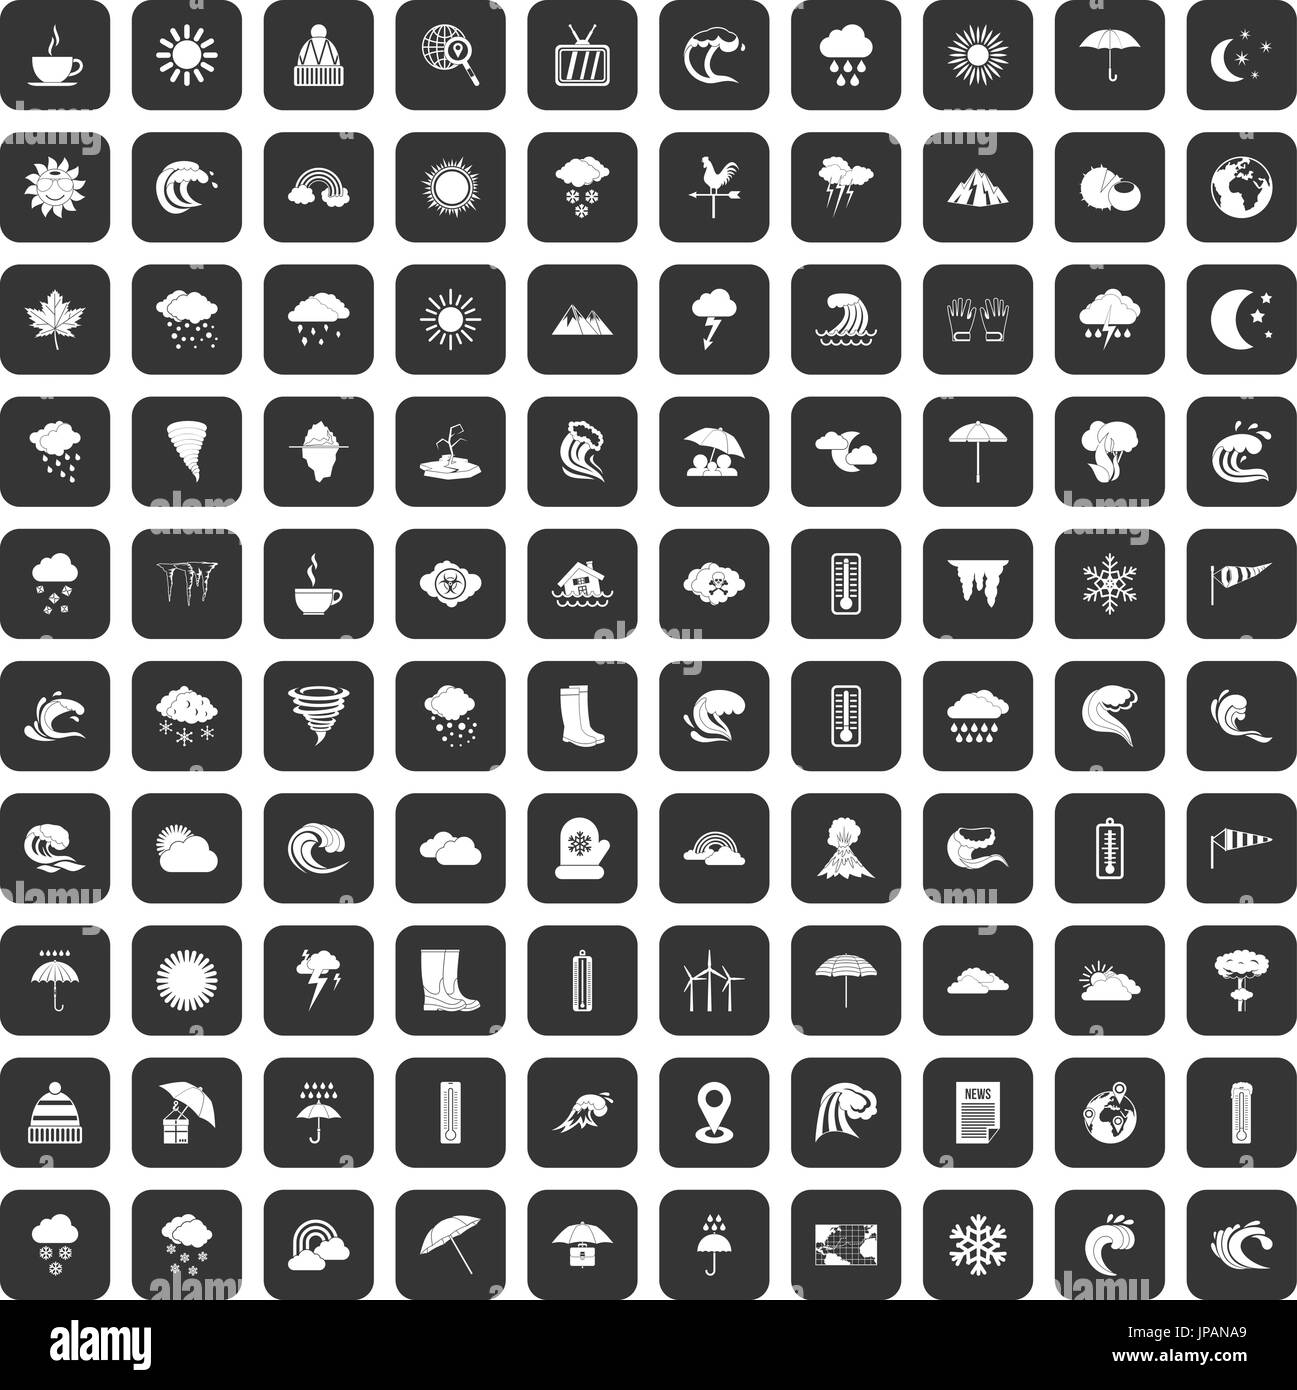 100 weather icons set black Stock Vector